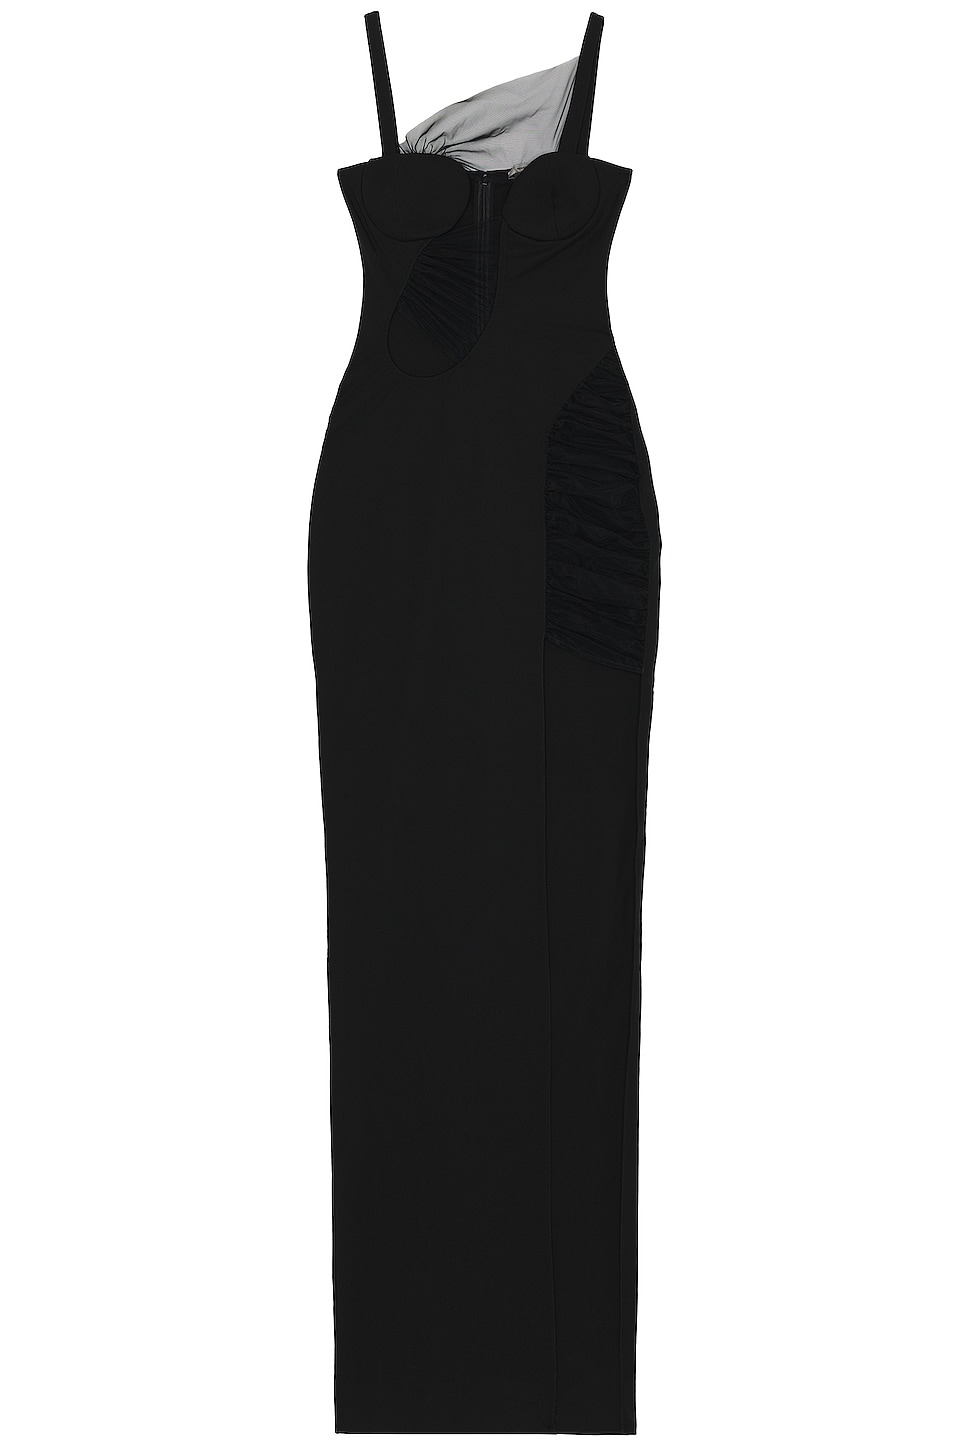 Image 1 of Nensi Dojaka Asymmetrical Panel Gown in Black